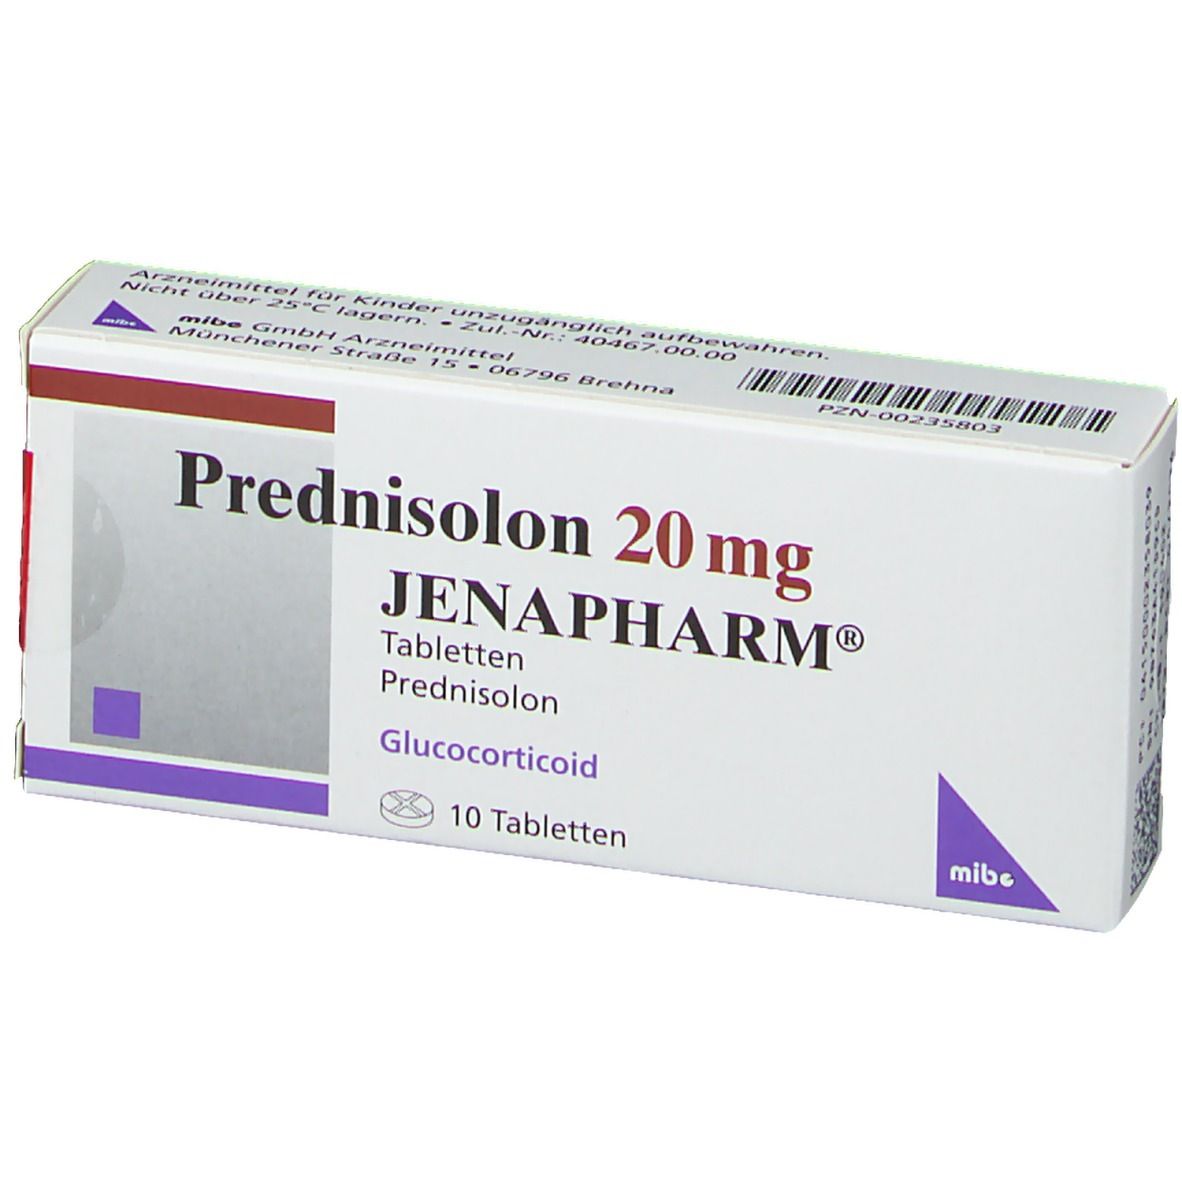 Prednisolon 20 mg JENAPHARM®